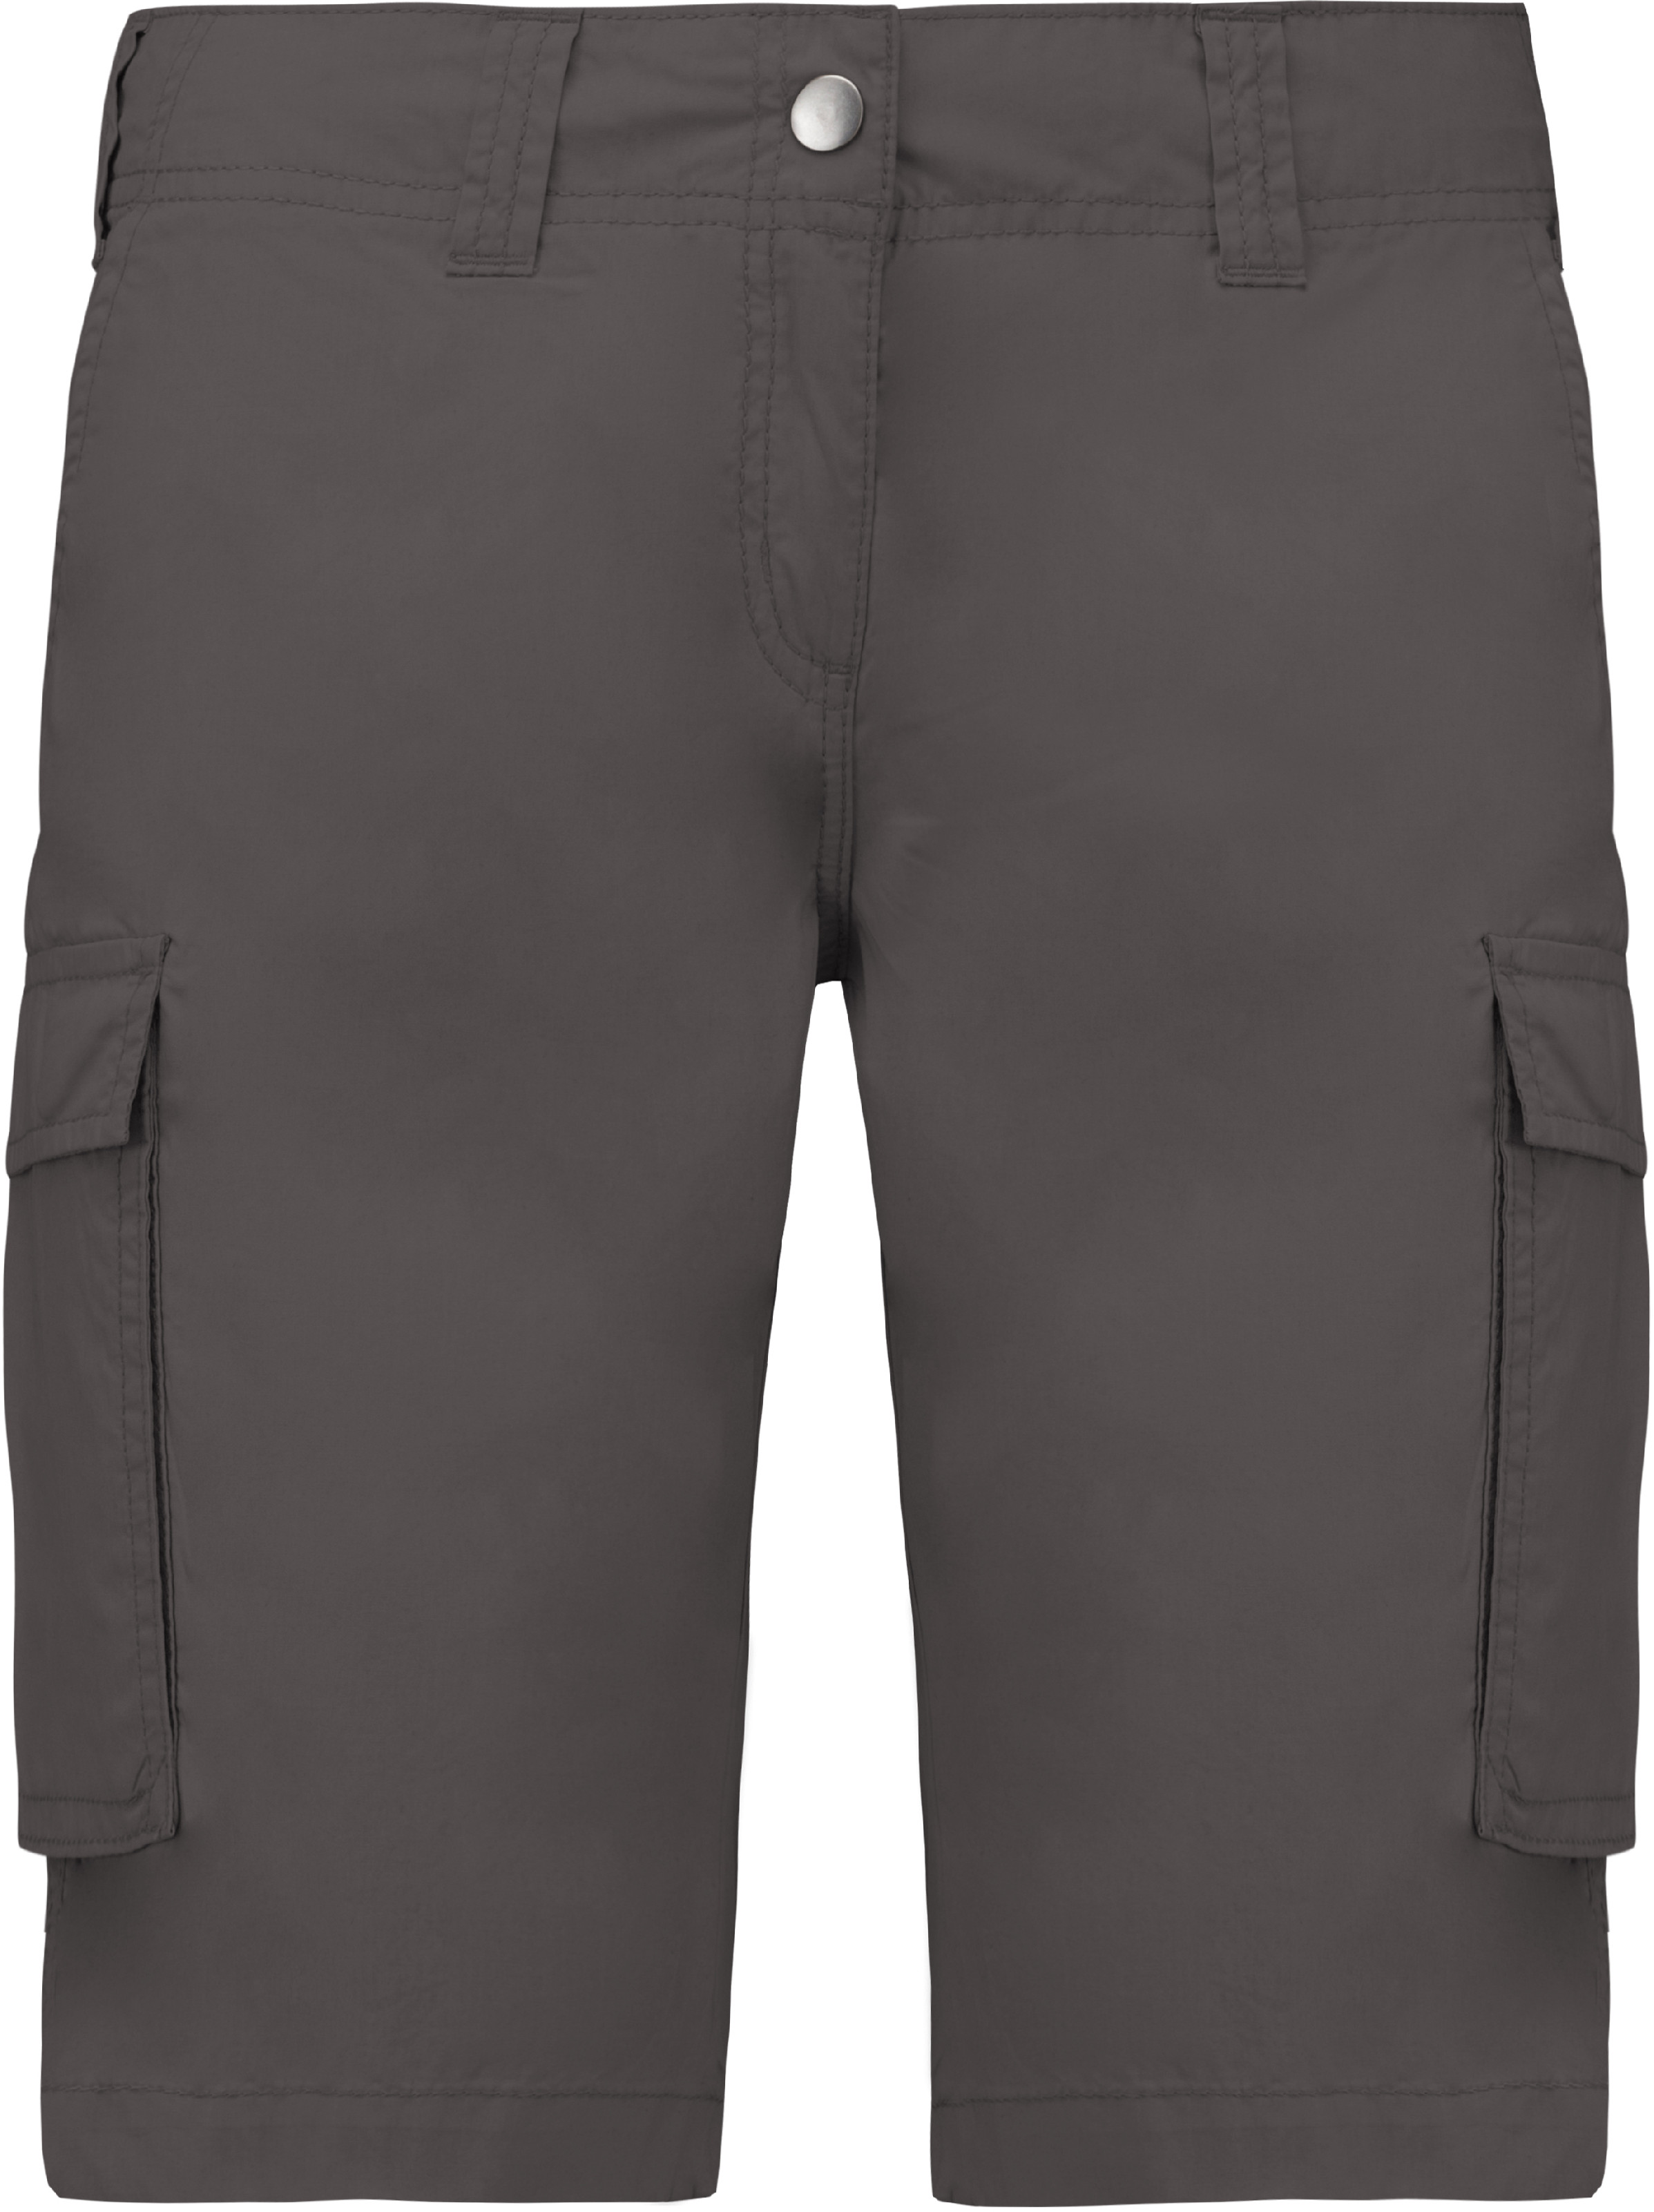 Dámské šortky s kapsami - Bermudy K756 Barva: tmavá břidlice, Velikost: 34